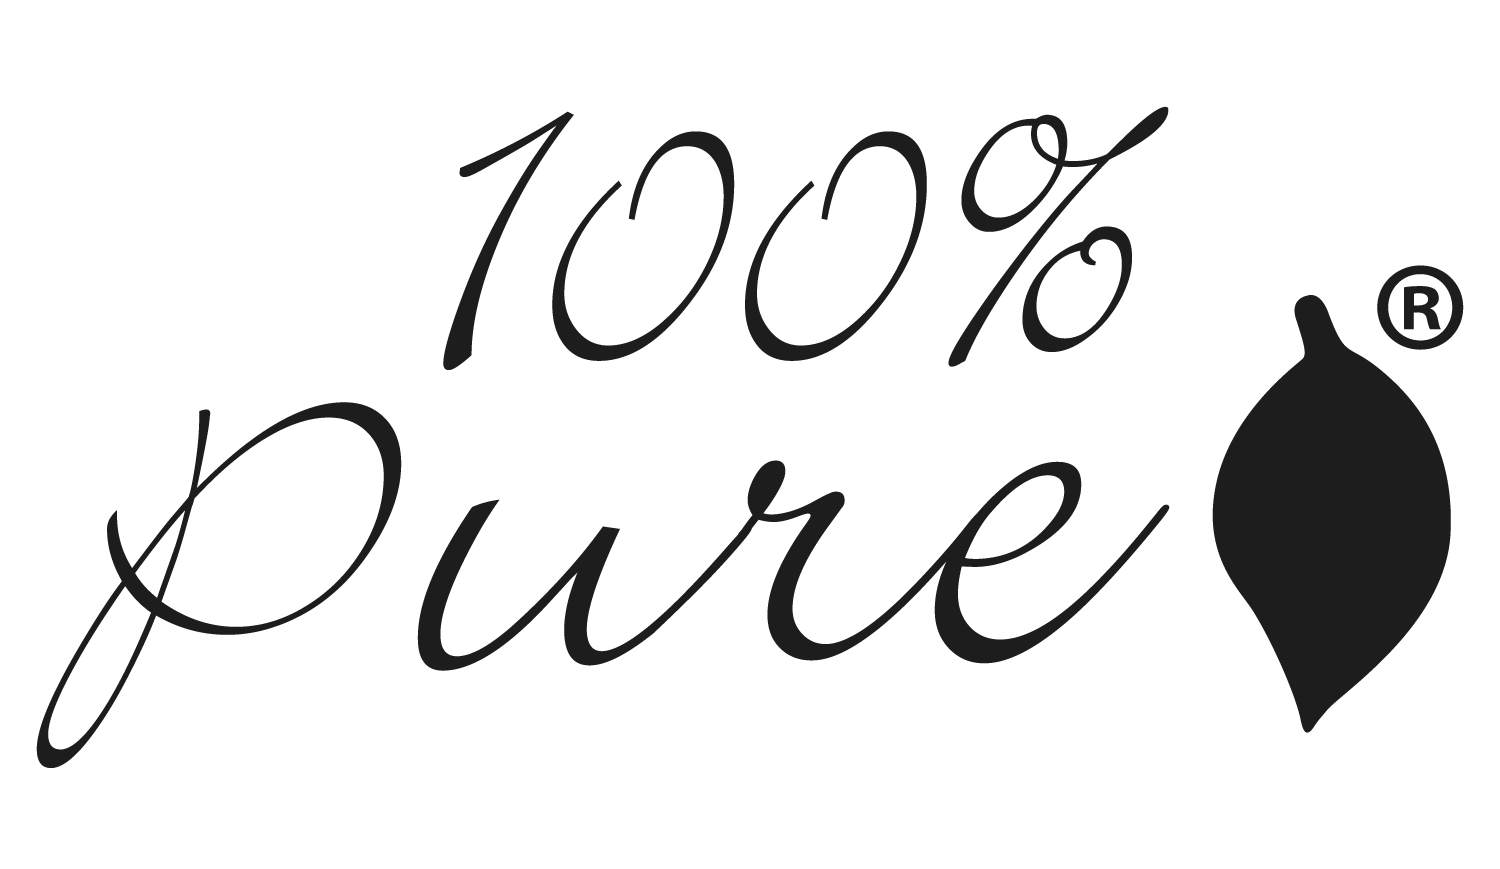 100% pure logo